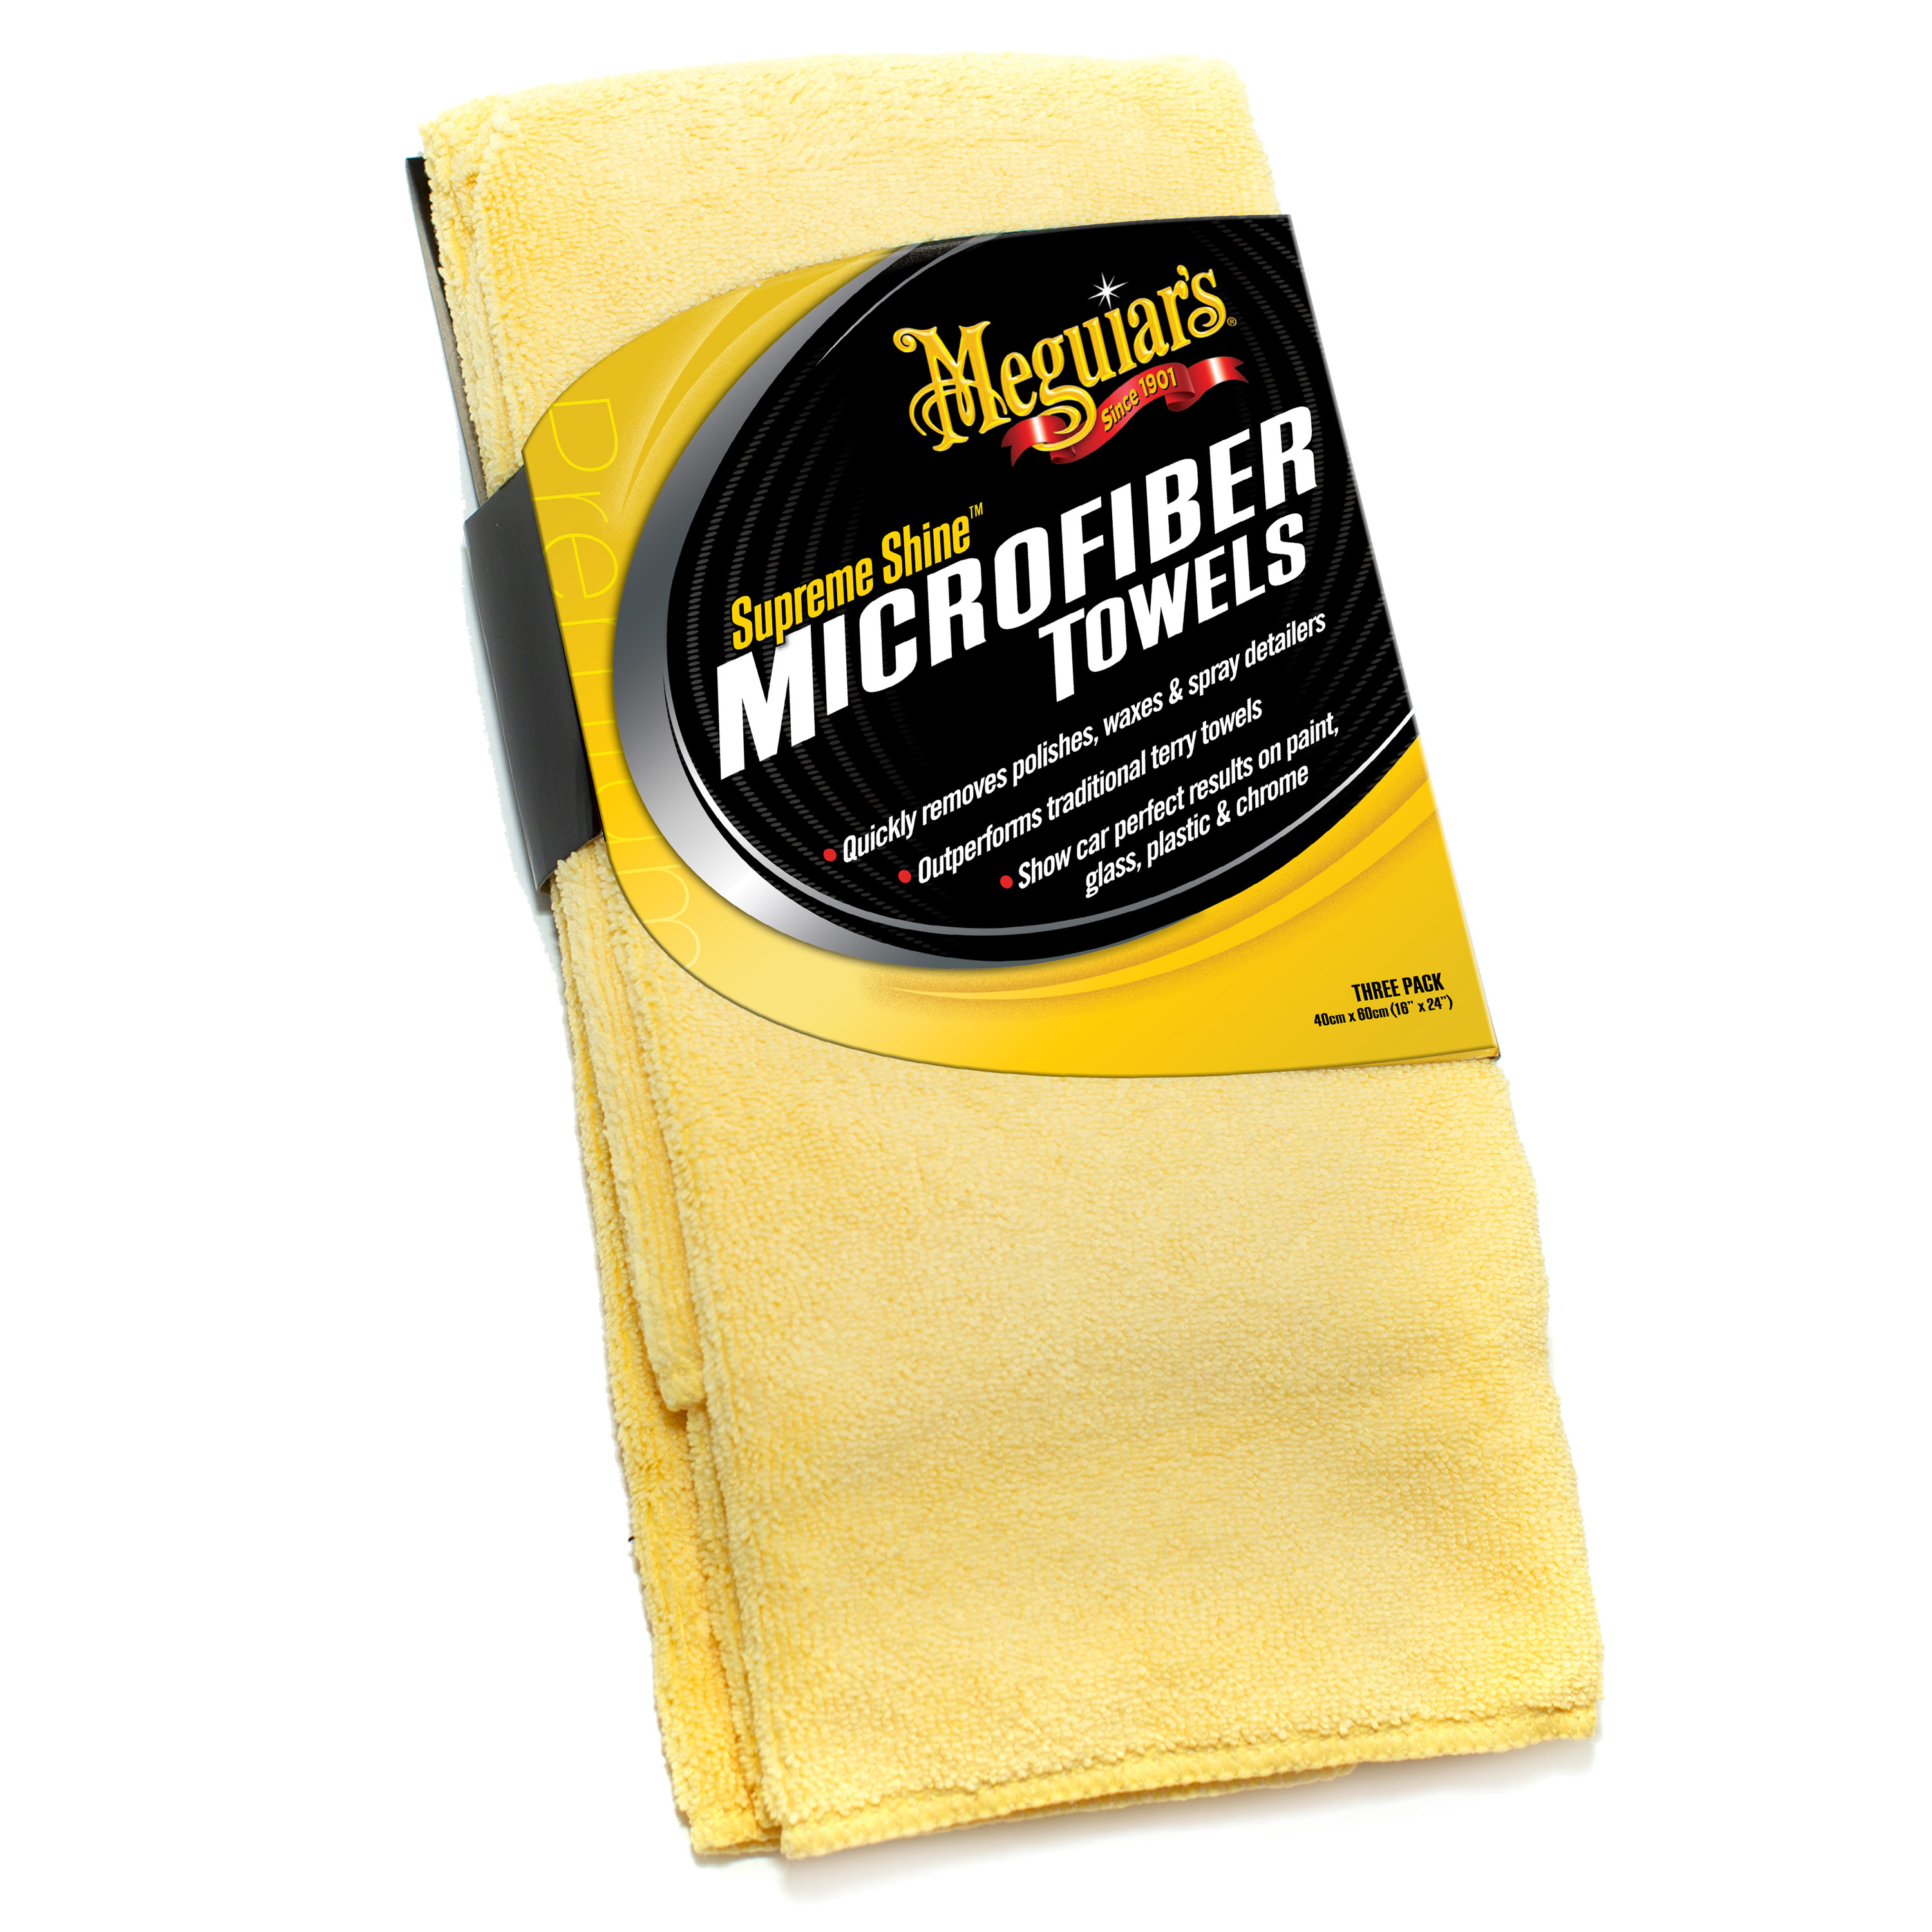 Meguiar's Supreme Shine Microfiber Towels, X2020, Pack of 3 - image 1 of 11